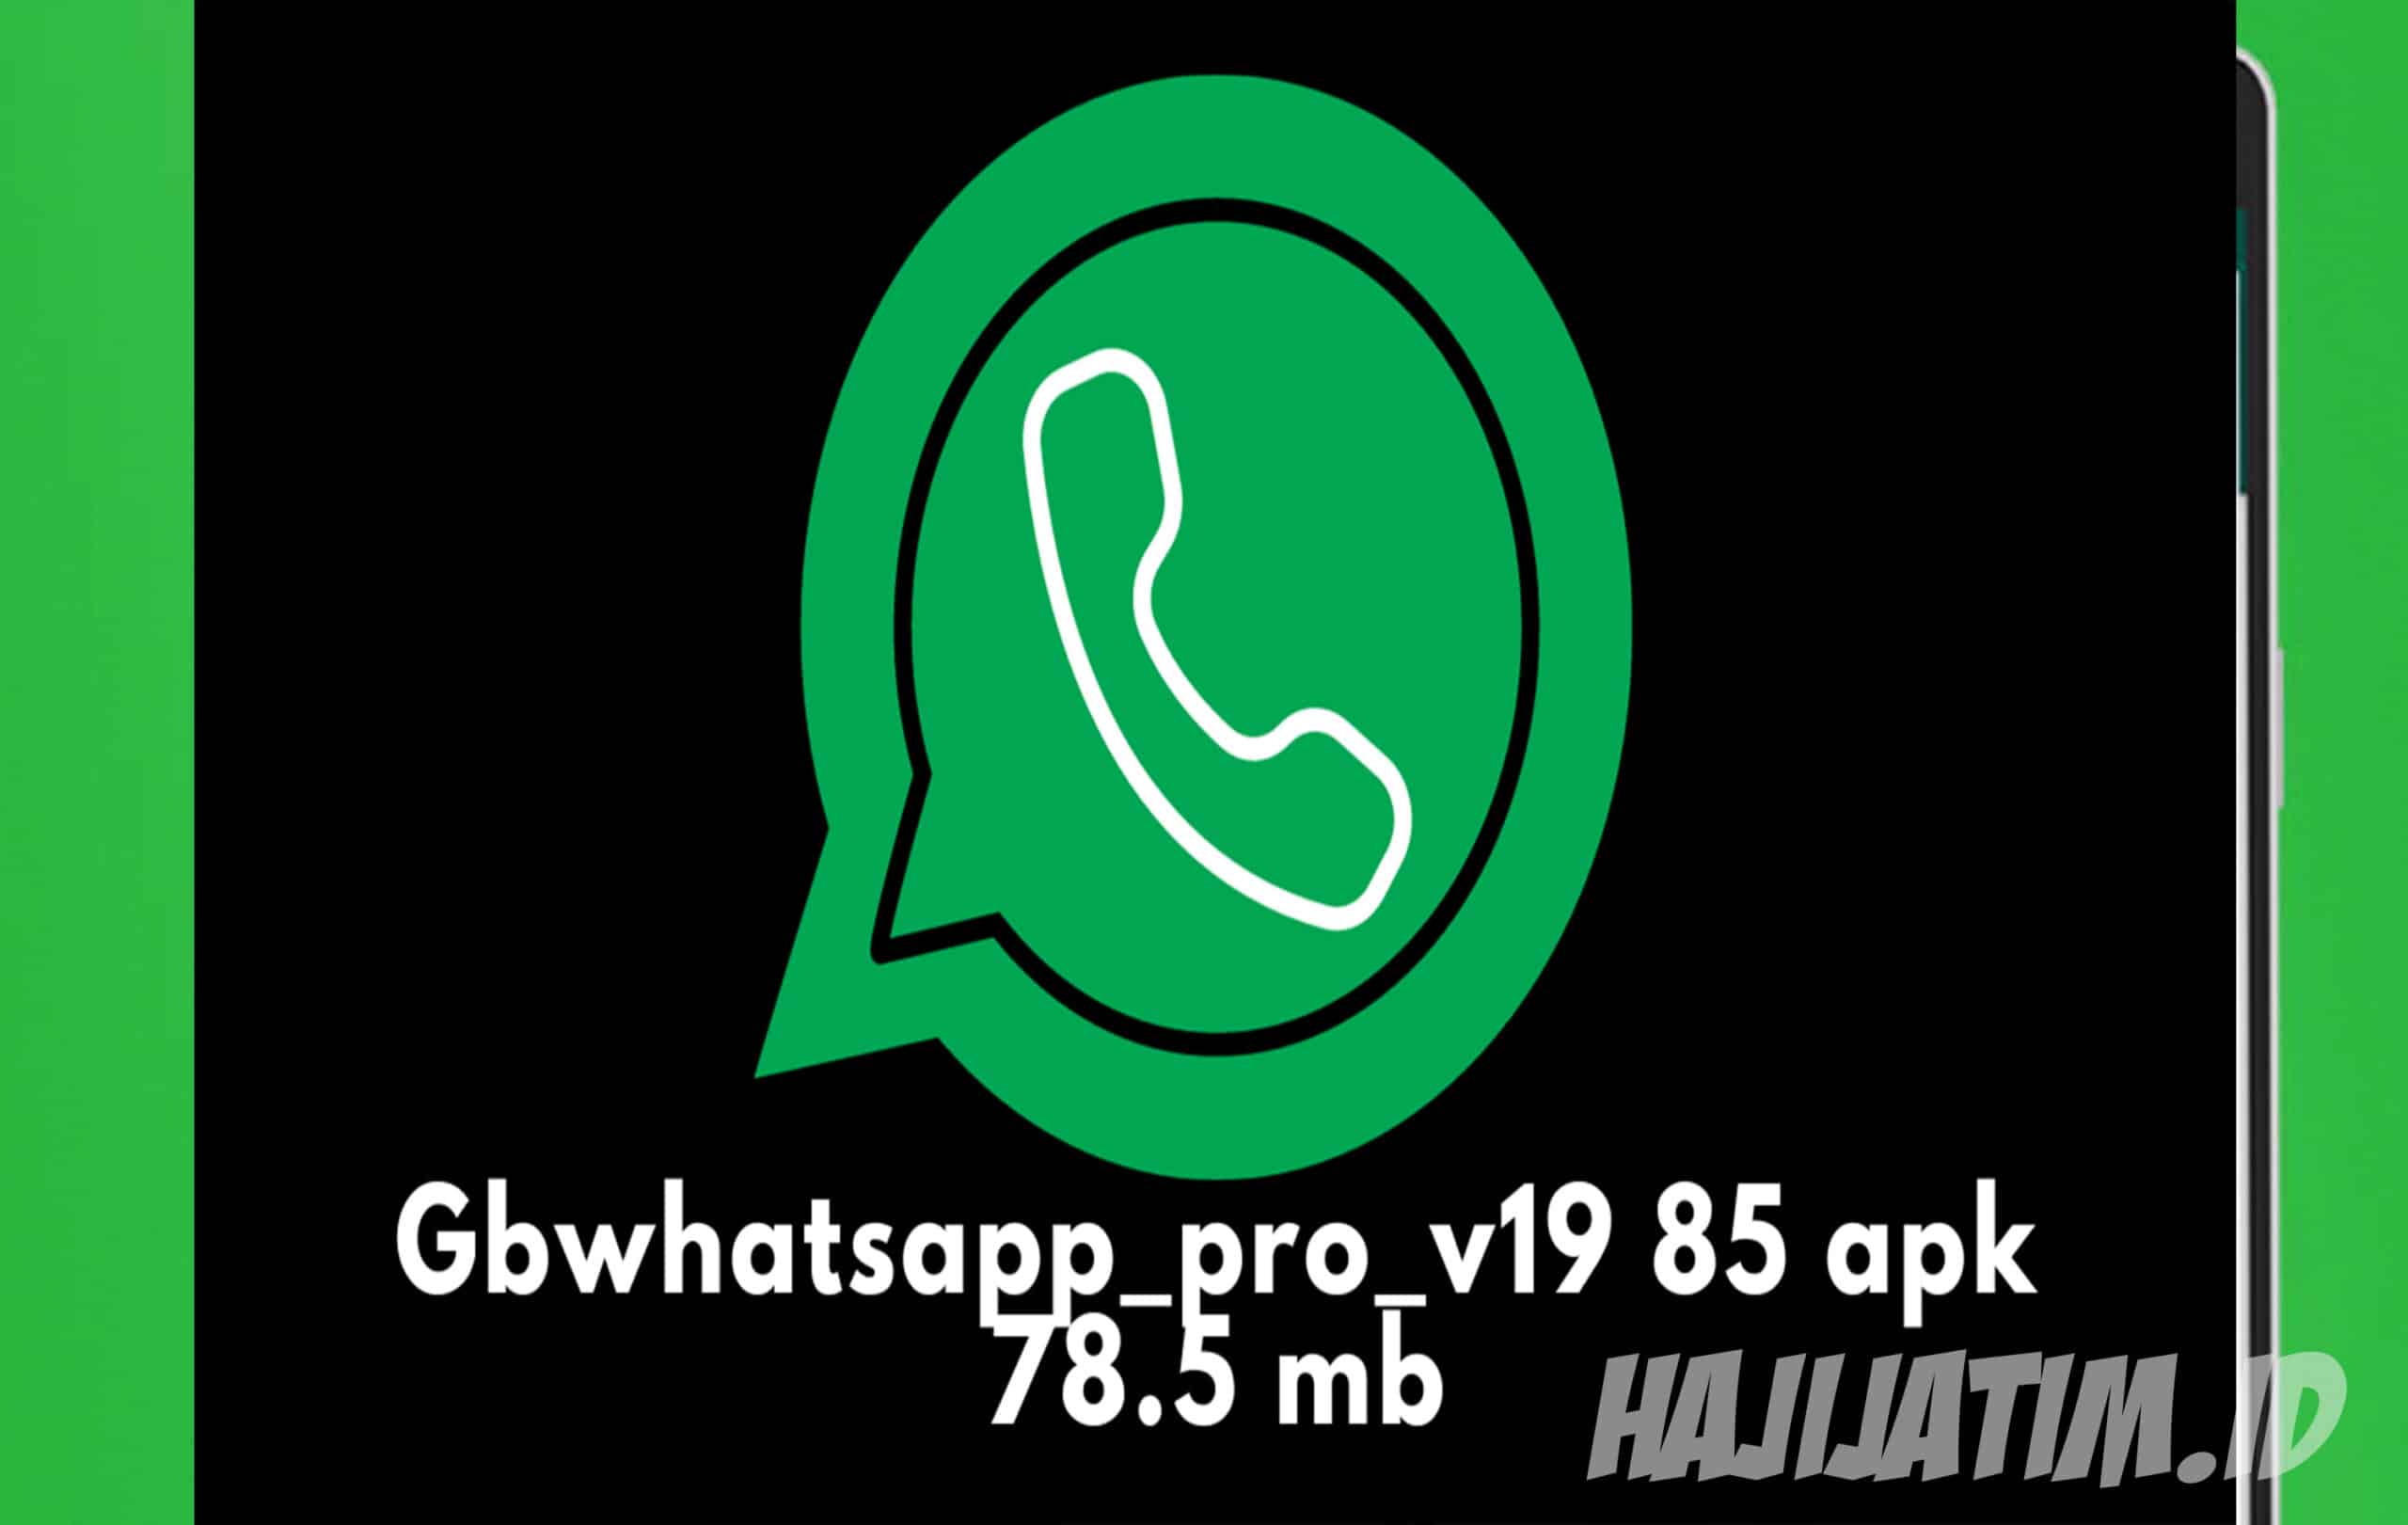 Gb whatsapp pro 19 85 apk 78.5